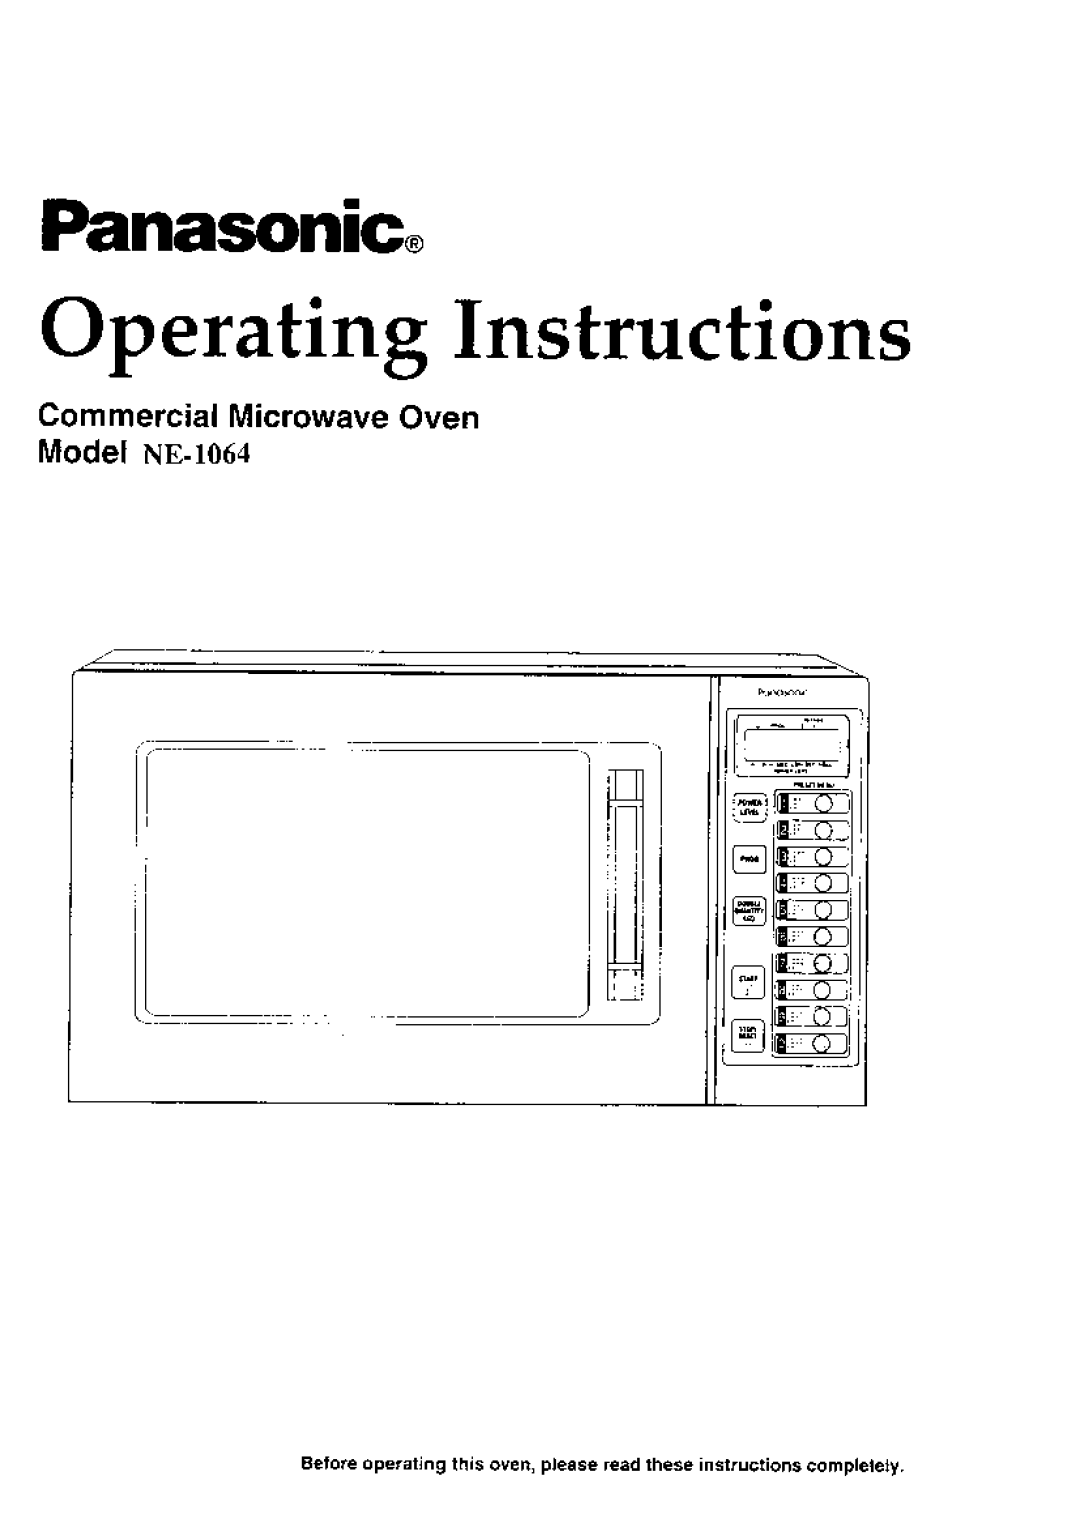 Panasonic manual CommercialMicrowaveOven, t^|l, Model NE-1064, f l--il, L::J, OperatingInstructions, Panasonic, t_i_J 